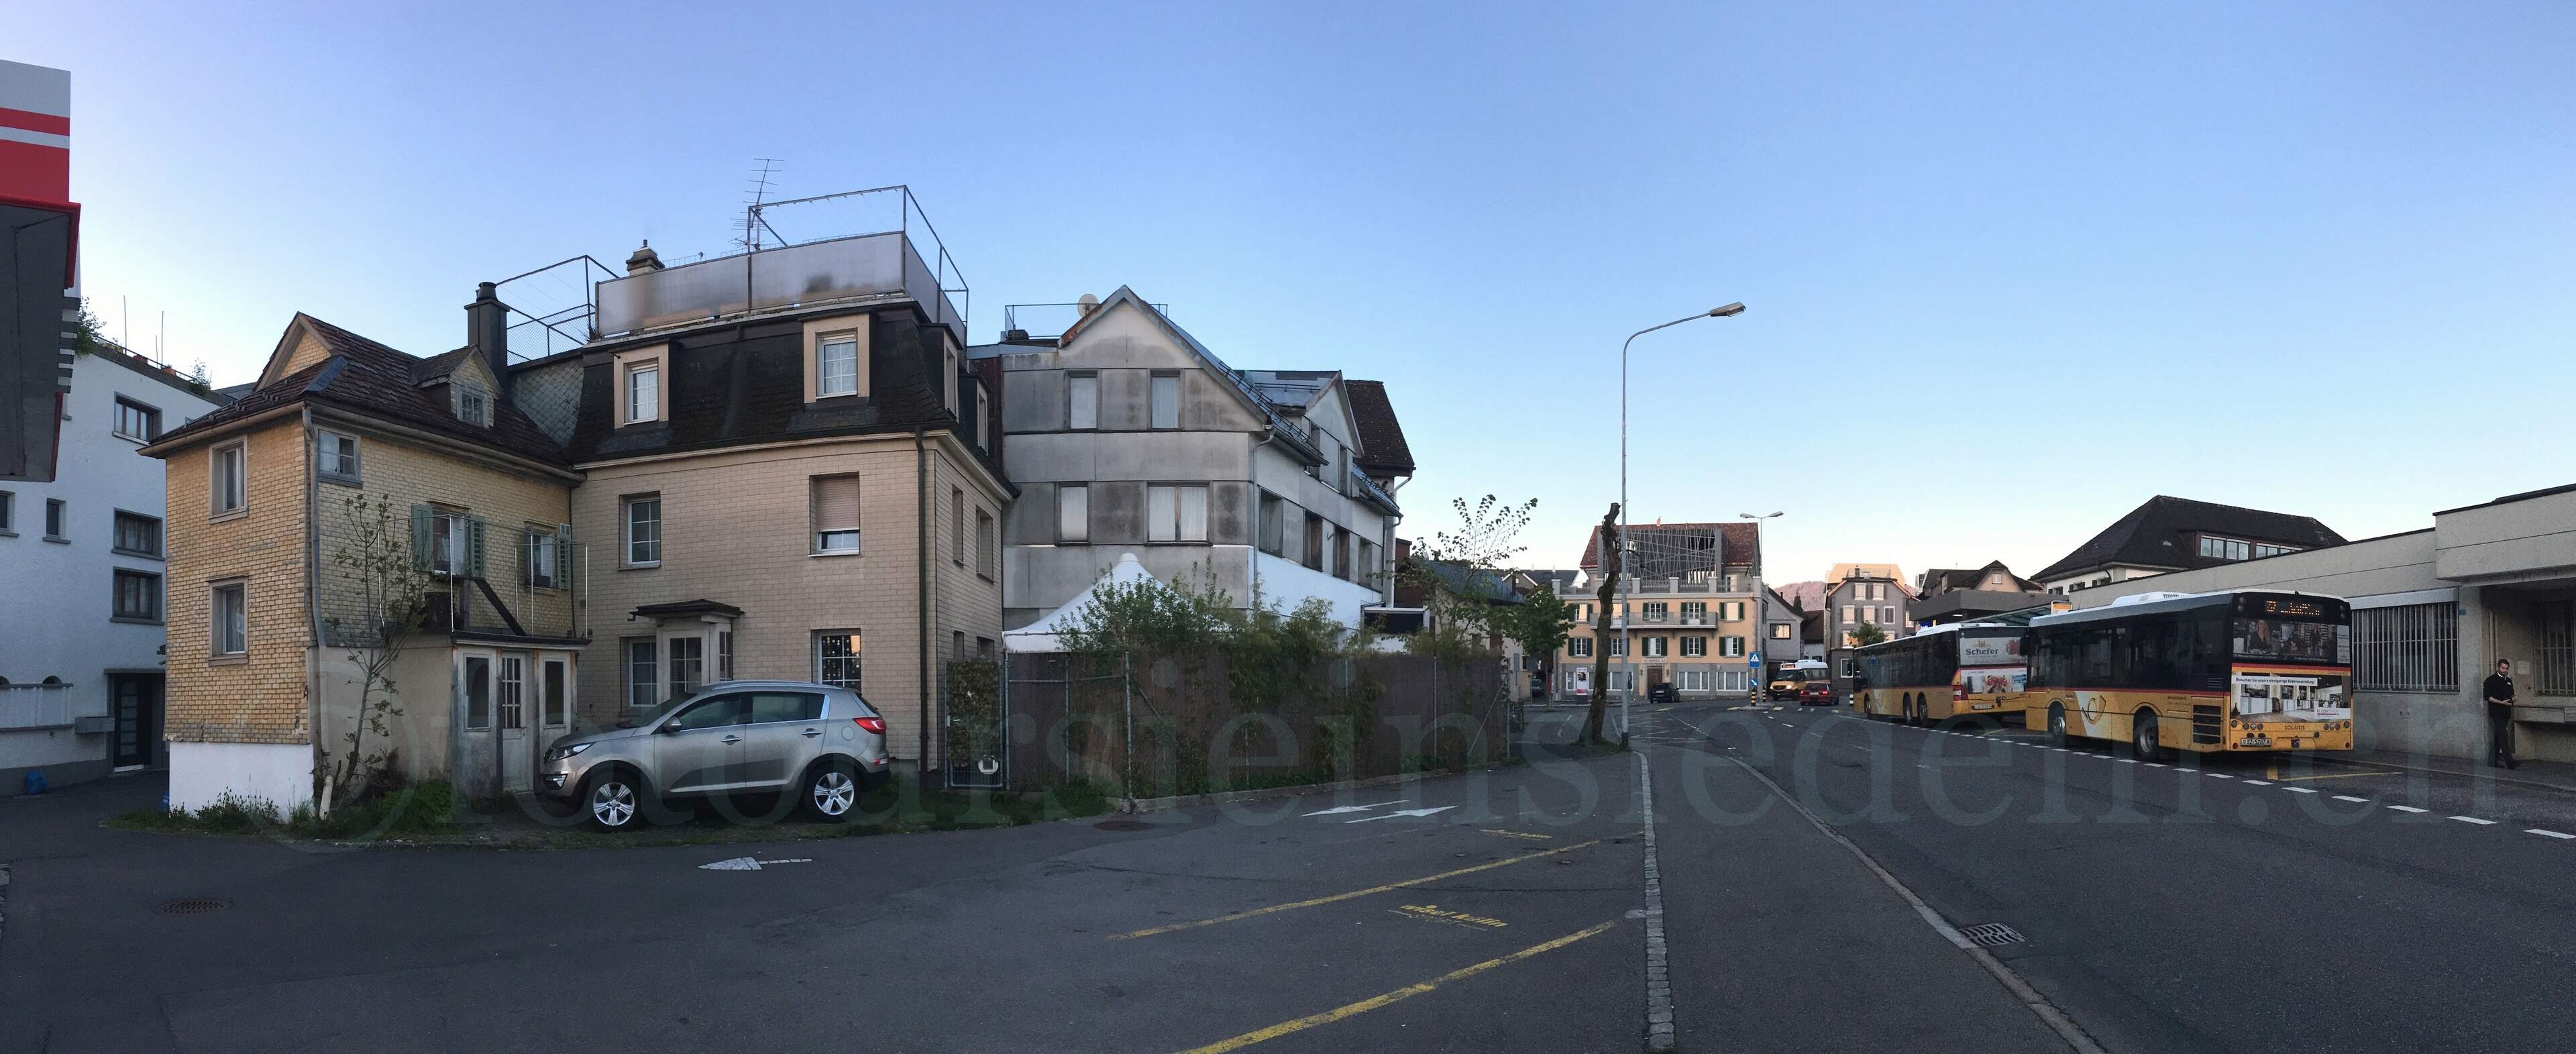 Panorama Einsiedeln 2020 180